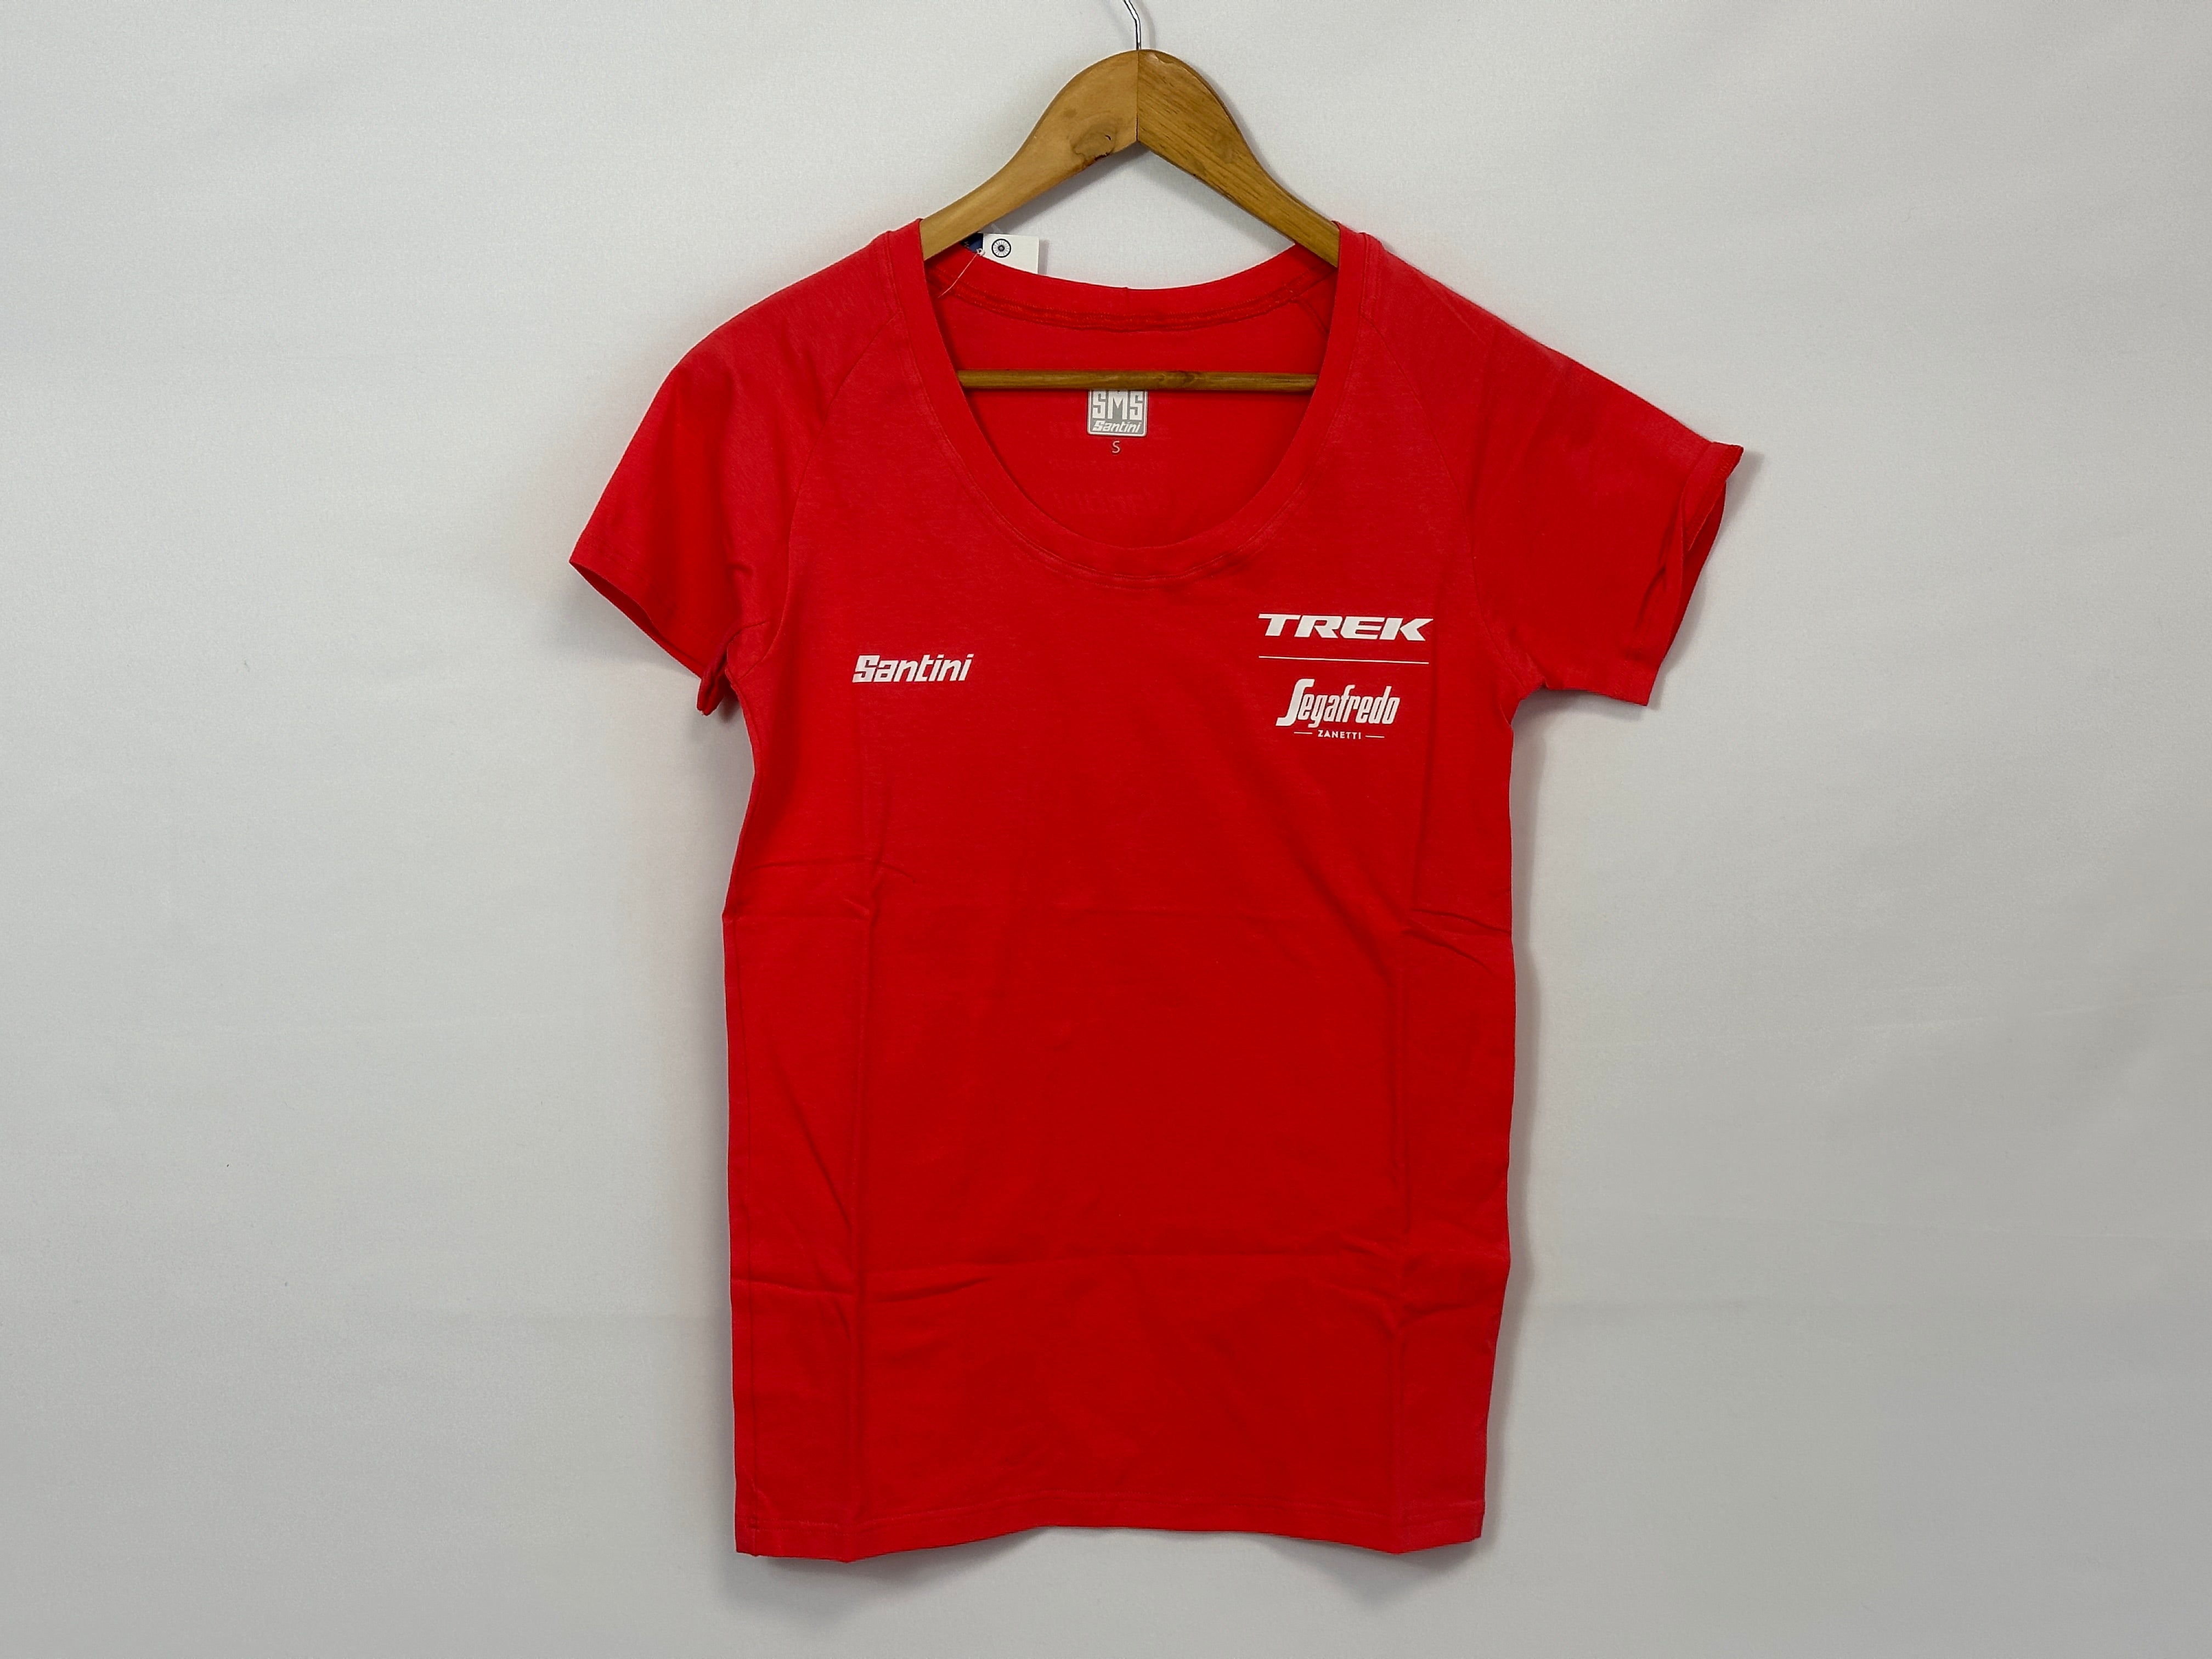 Team Trek Segfredo Women's- S/S Casual T-Shirt by Santini